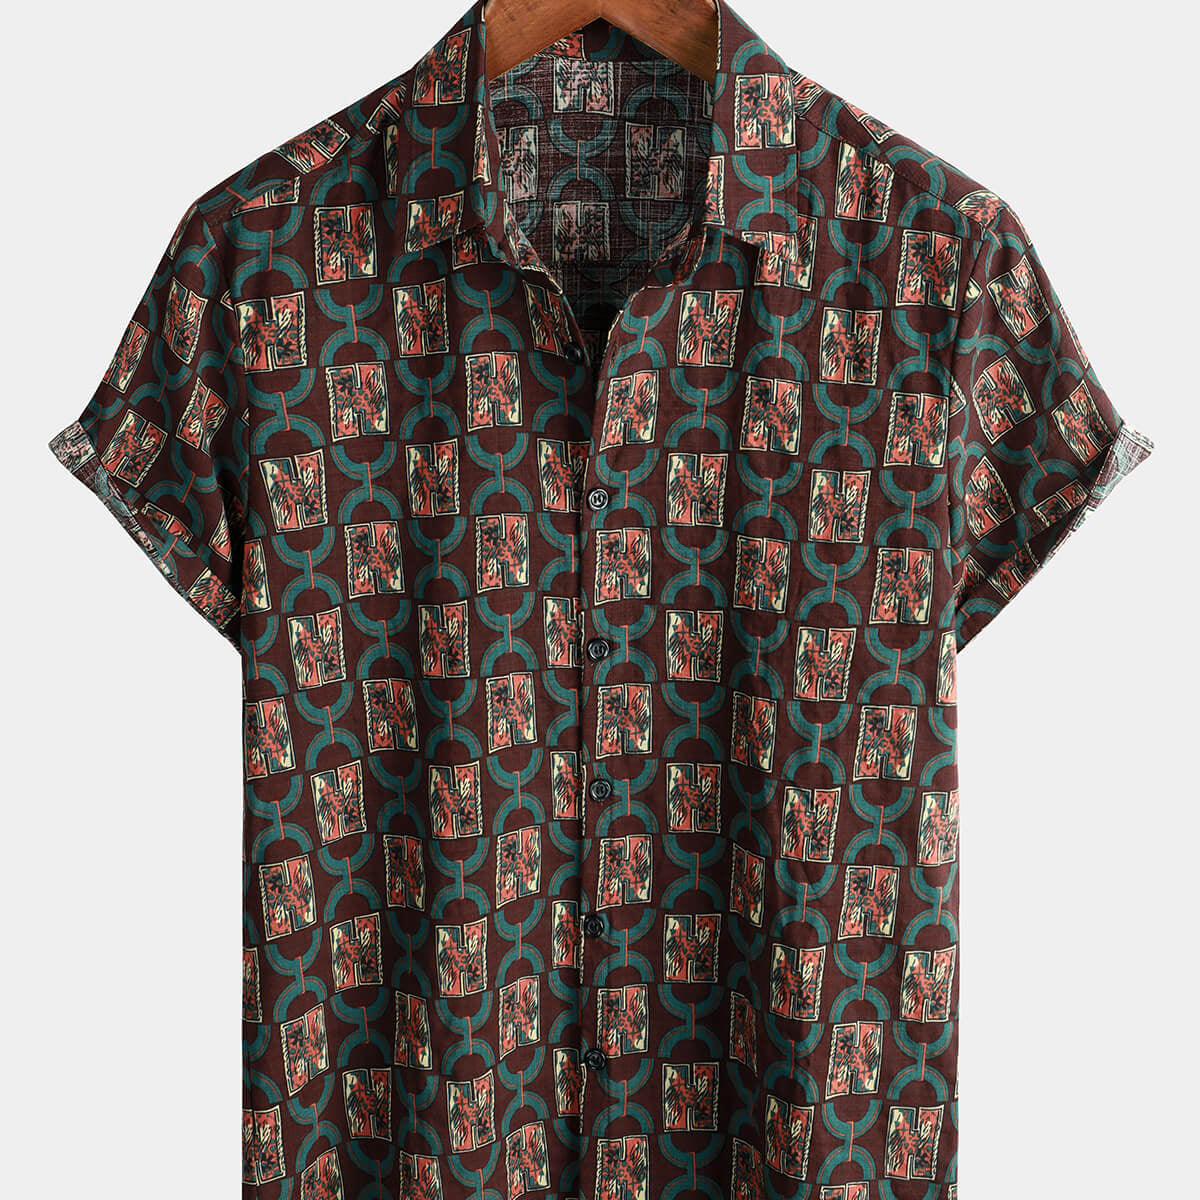 Men's Vintage Geometric Art Print Cotton Button Up Summer Western Brown Short Sleeve Shirt